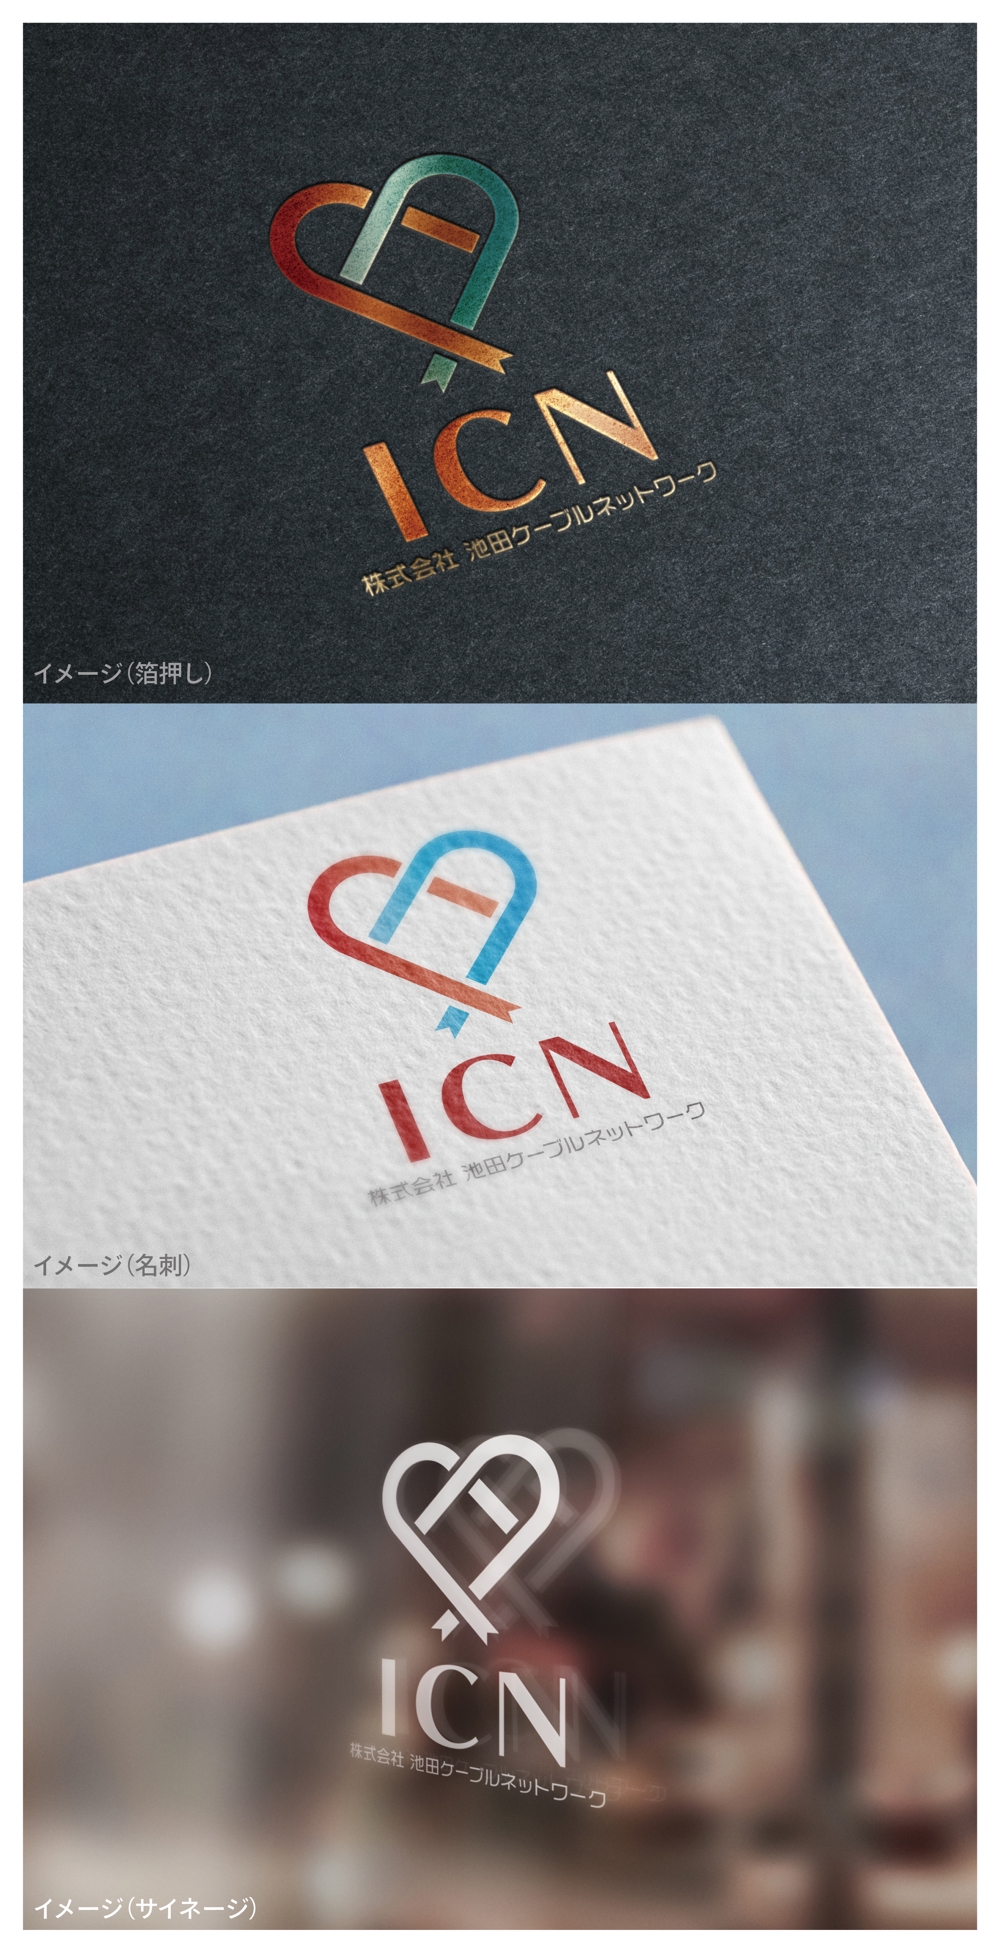 ICN_logo01_01.jpg